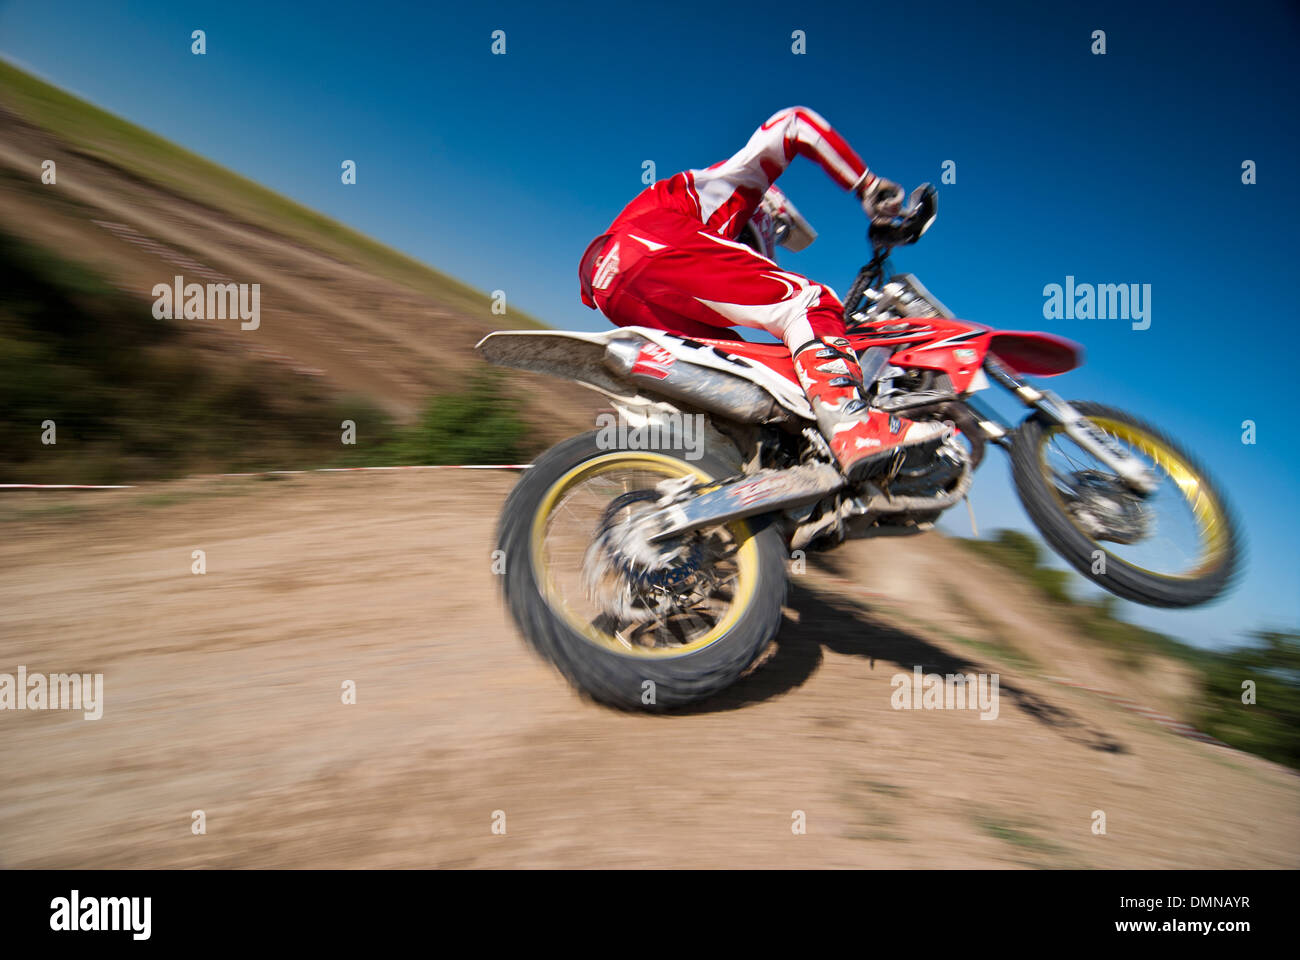 Motocross rider on a race track Stock Photo